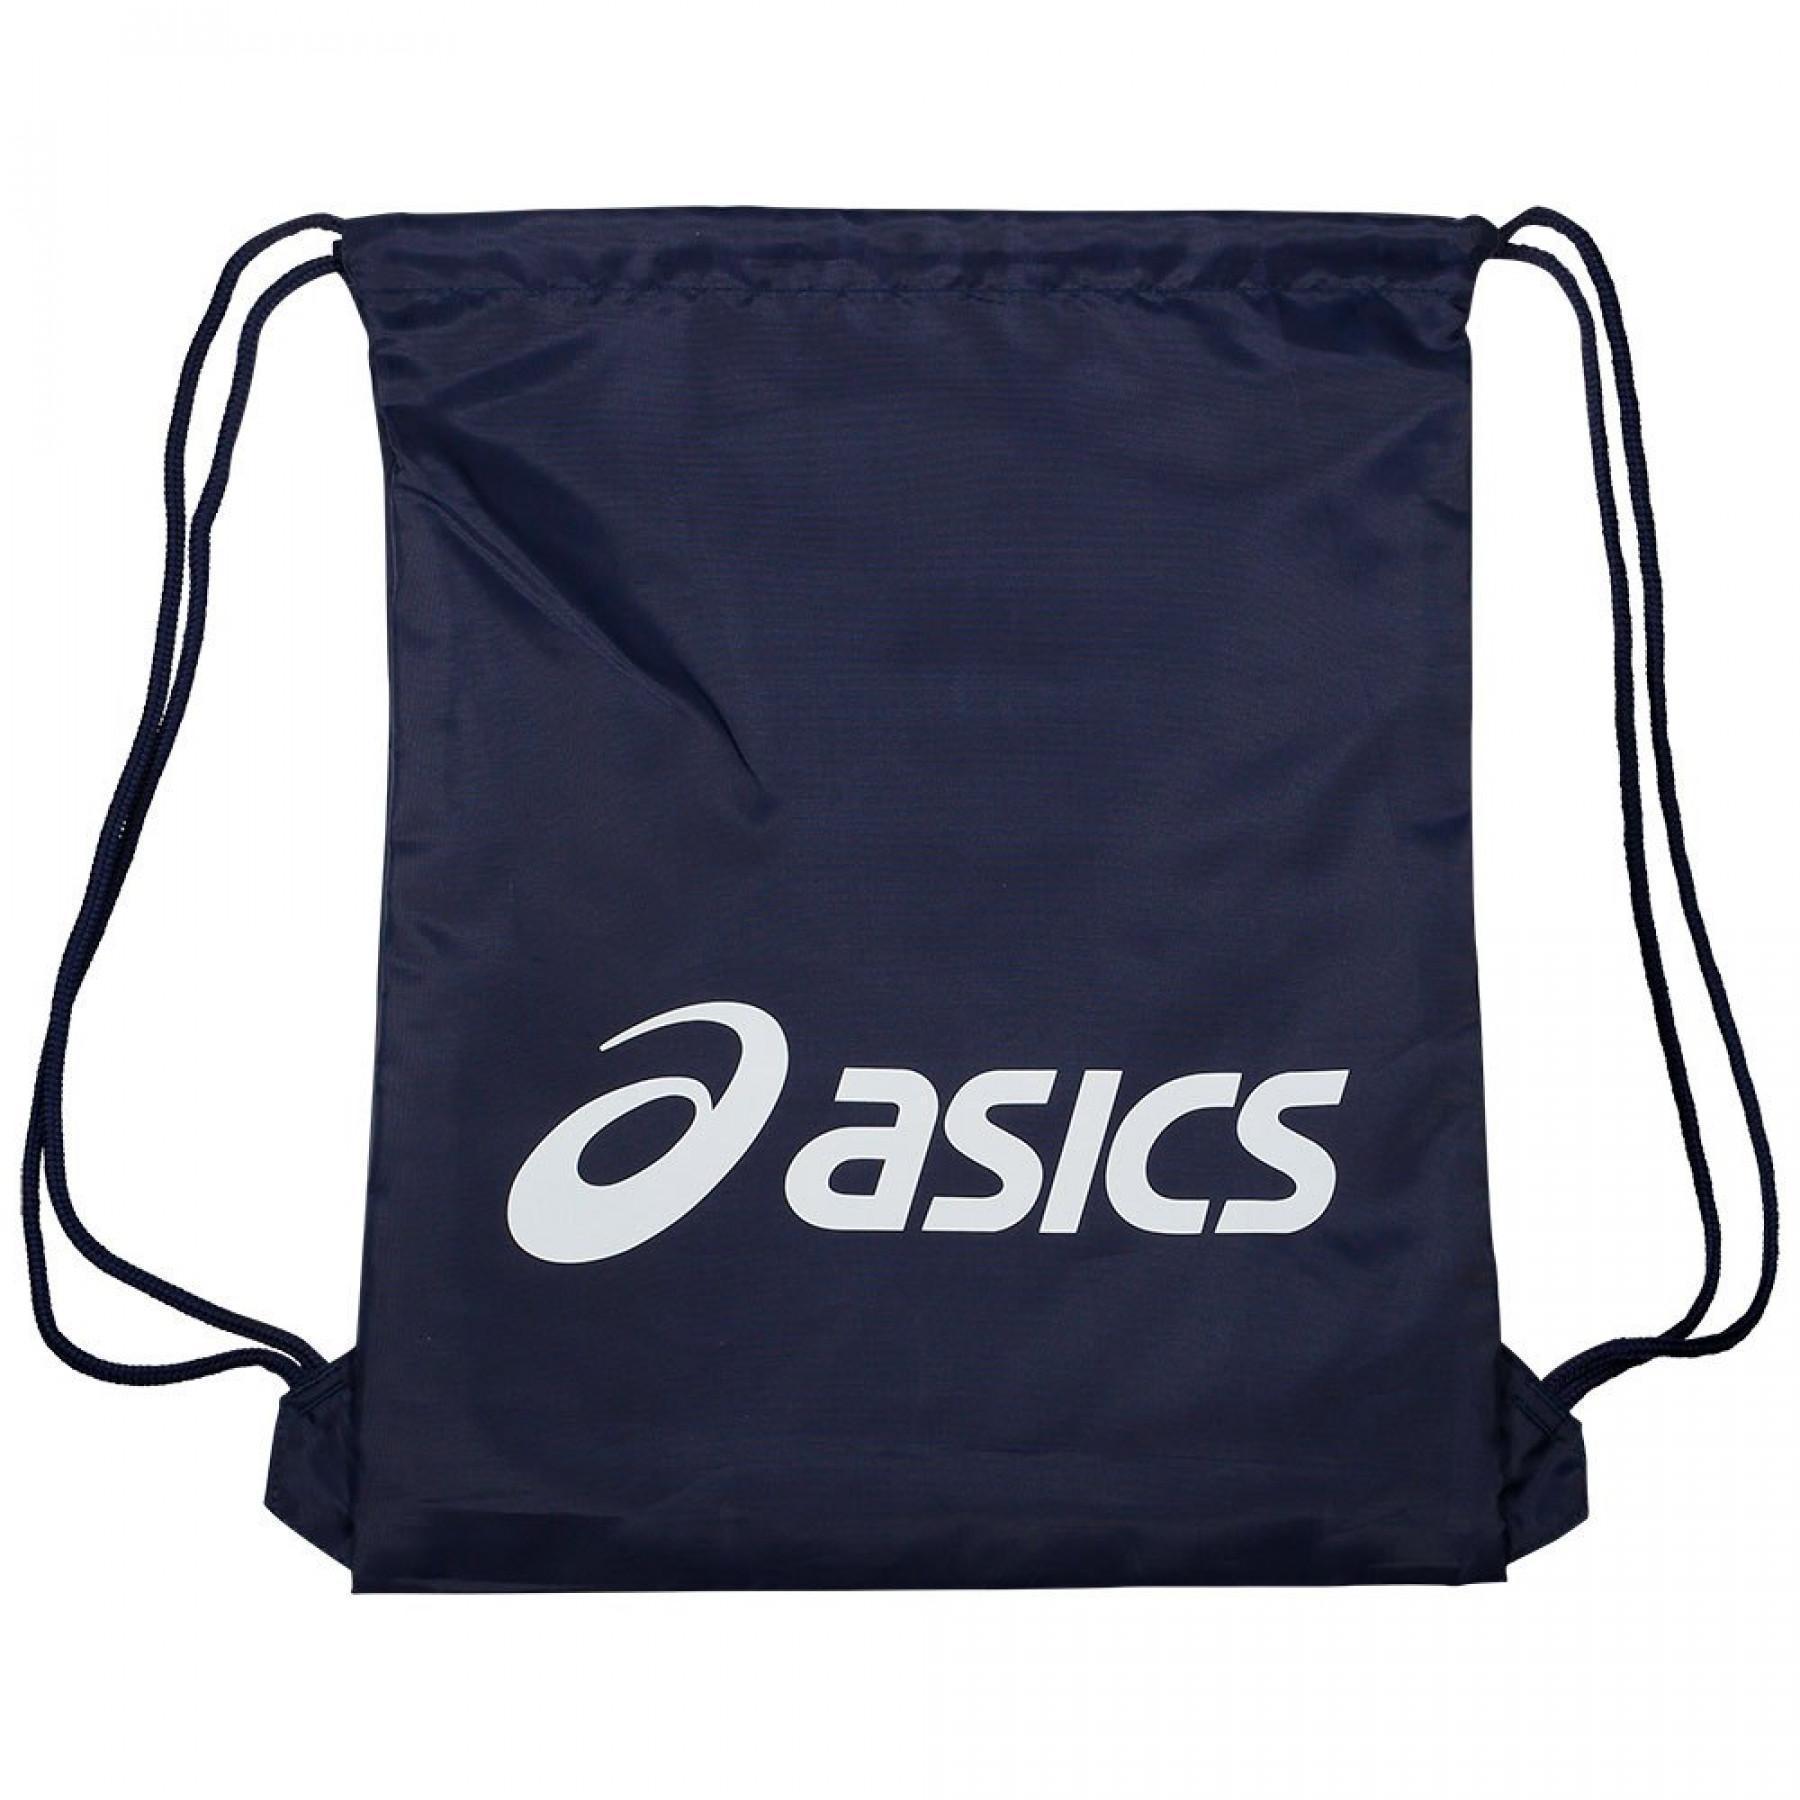 Backpack Asics Drawstring